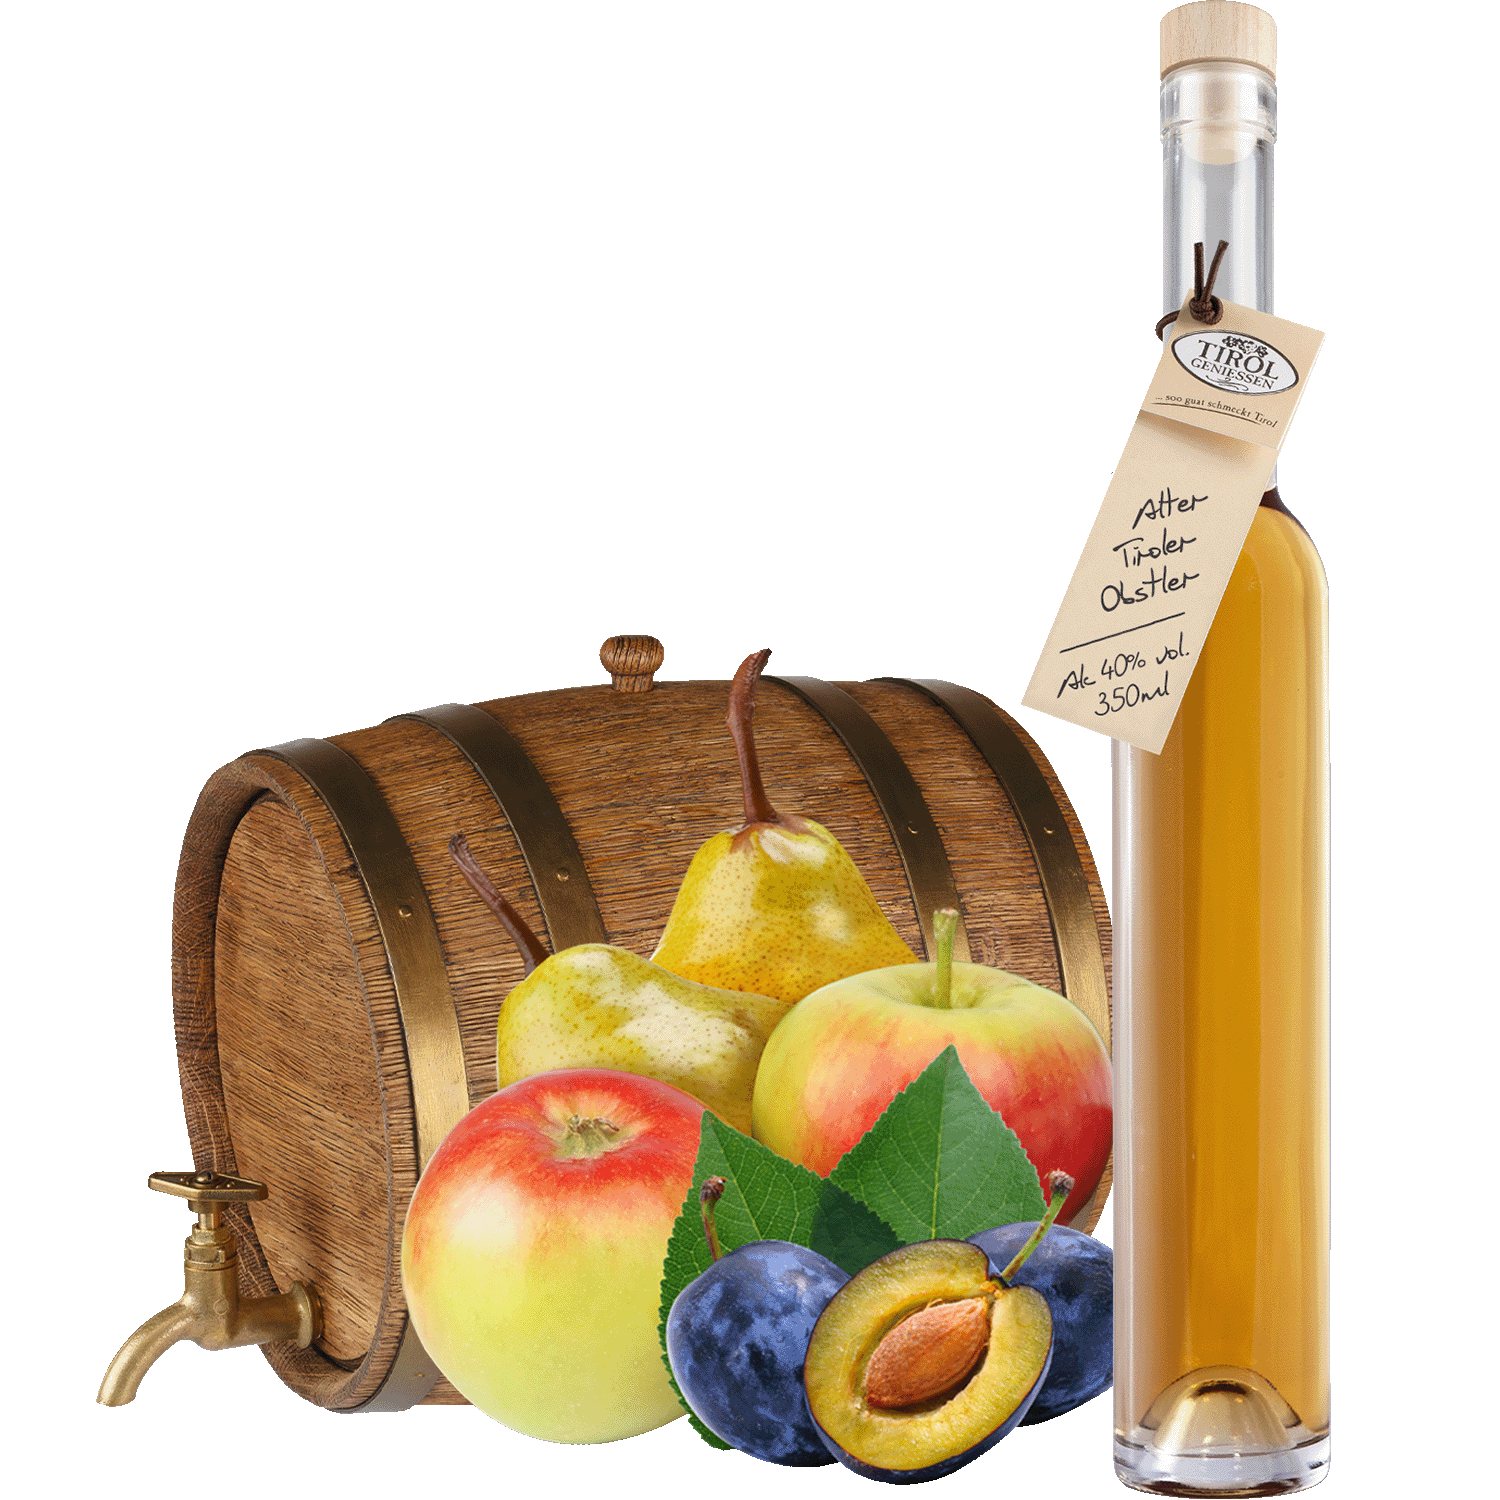 Old Fruit Spirit in gift bottle from Austria from Tirol Geniessen